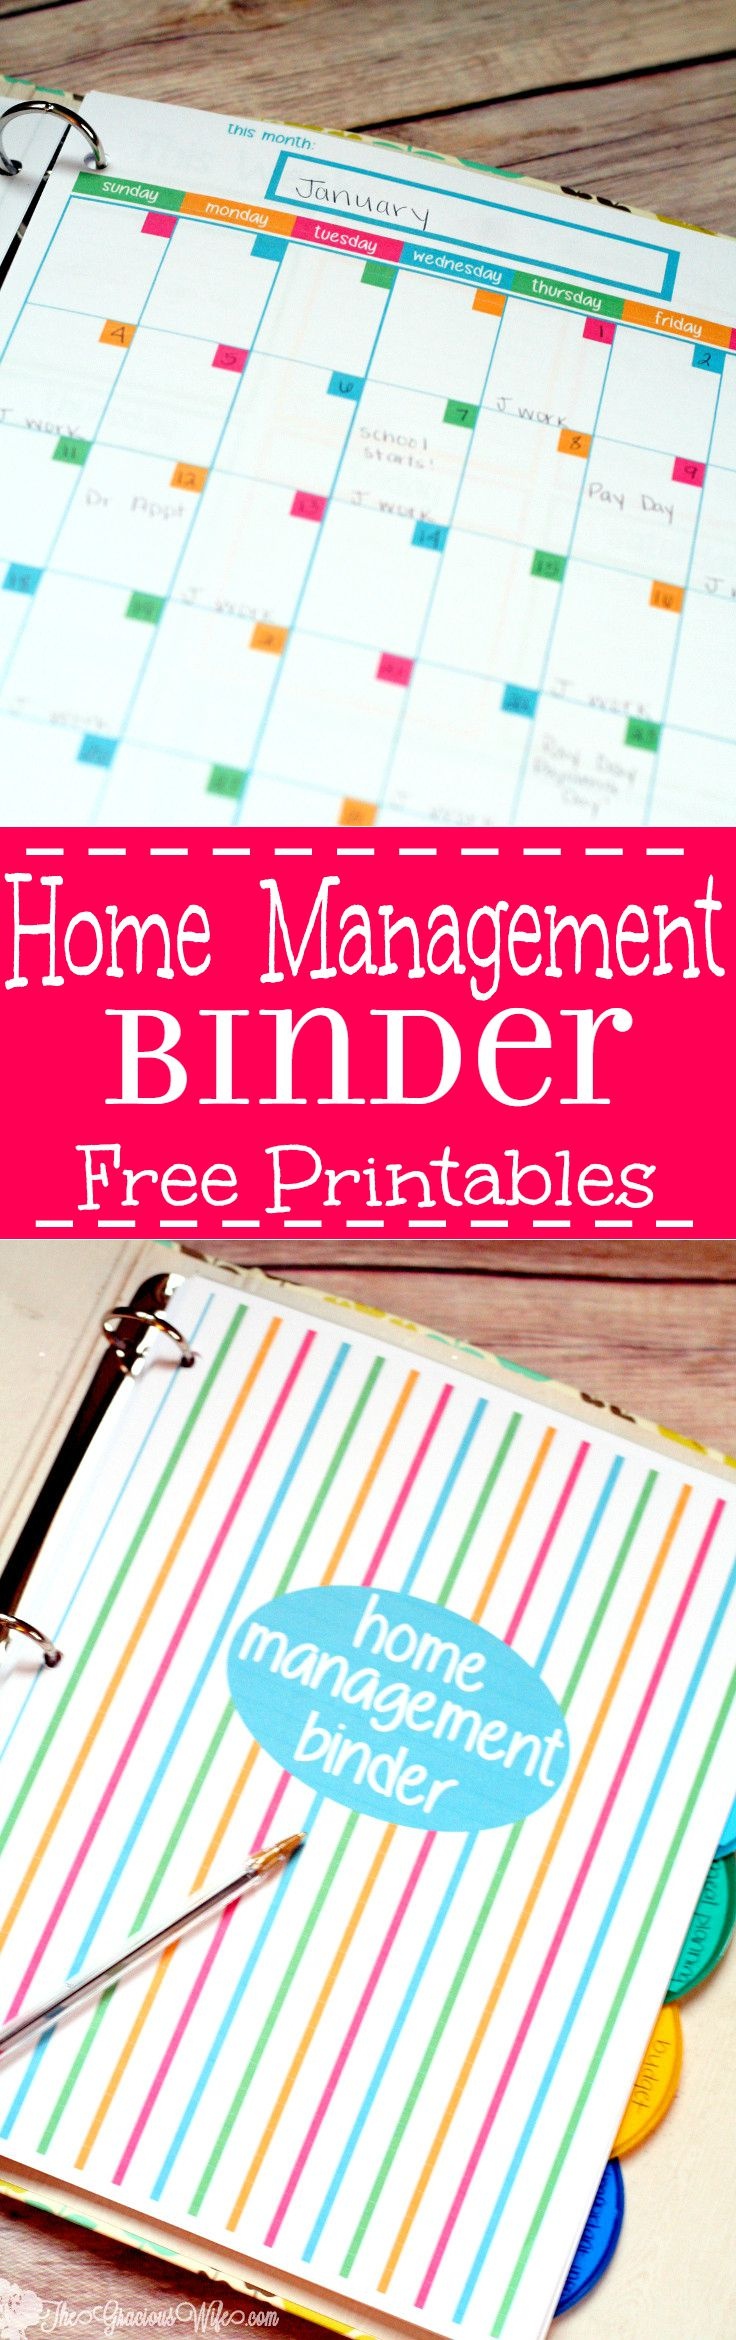 Home Management Binder - Free Printables | The Gracious Wife - Home Management Binder Free Printables 2018